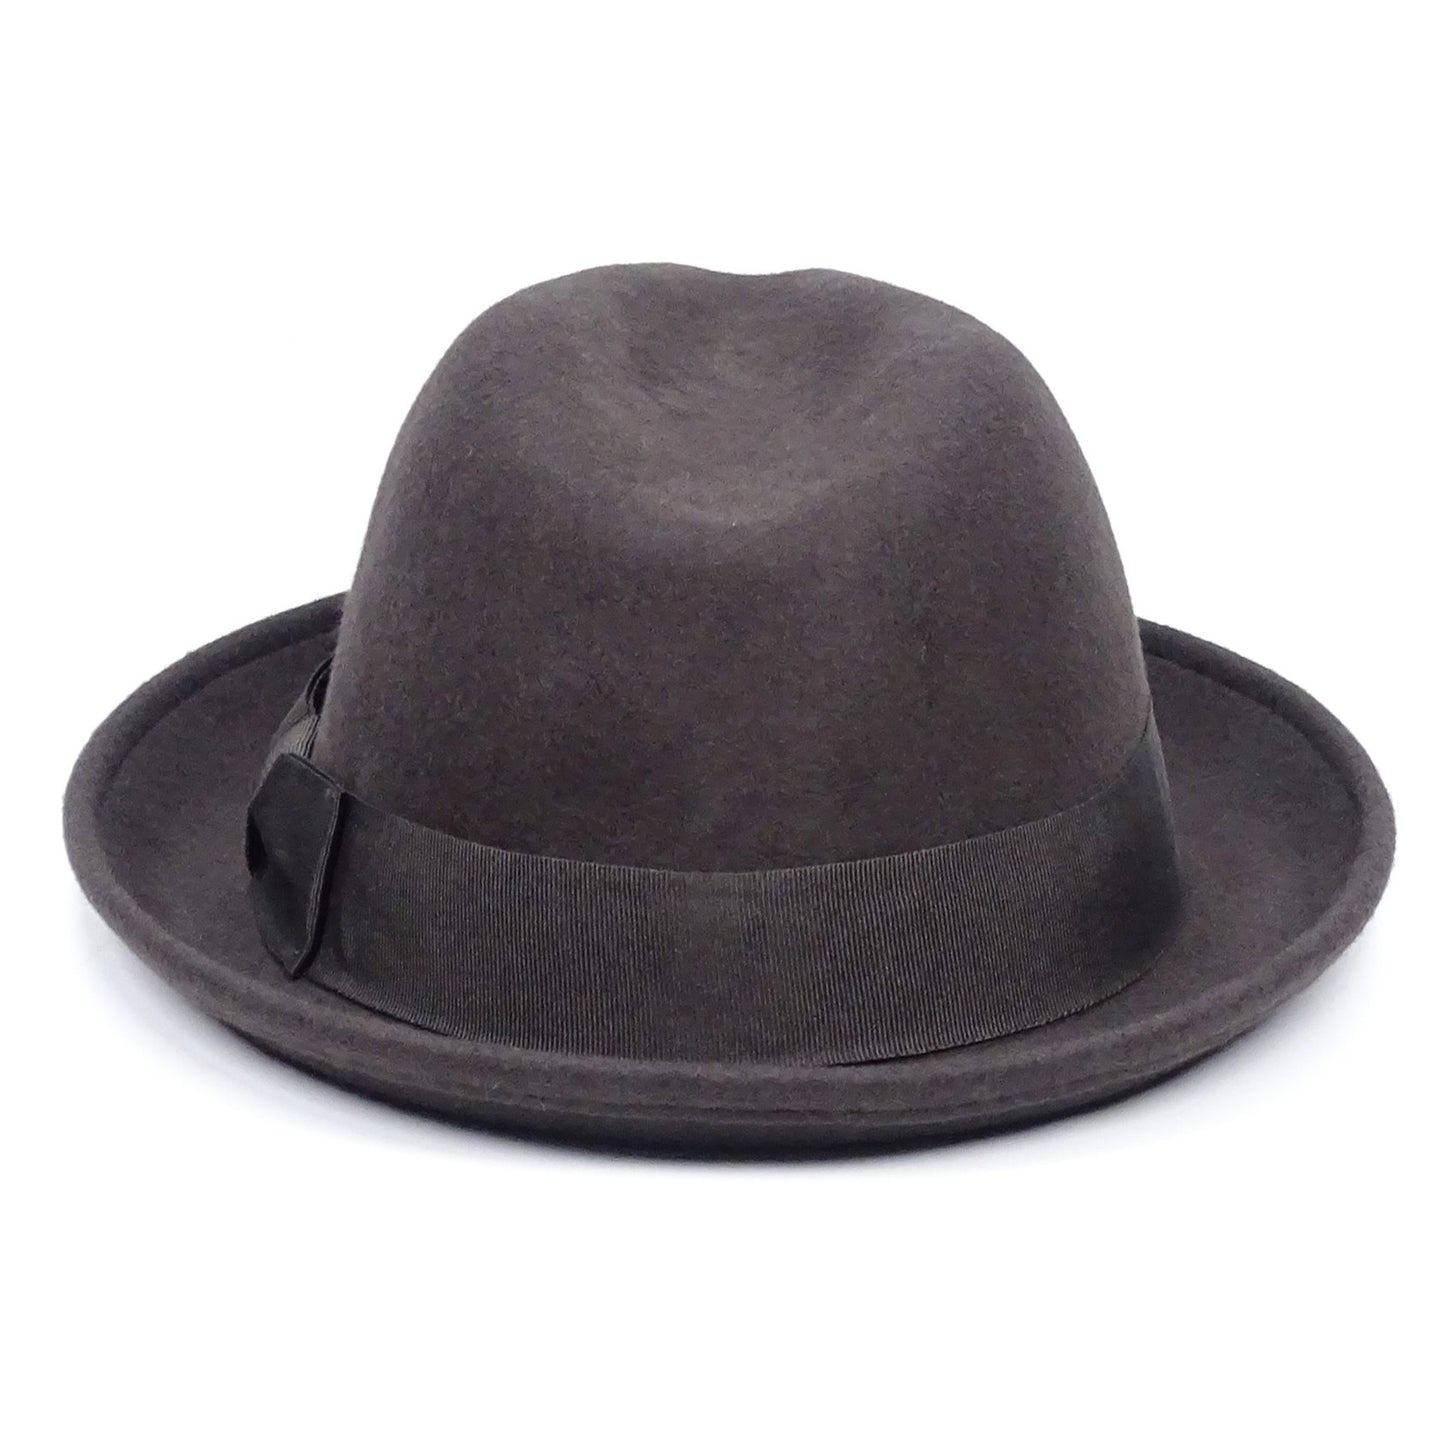 Purely Australian Wool Felt Fedora Hat 3156